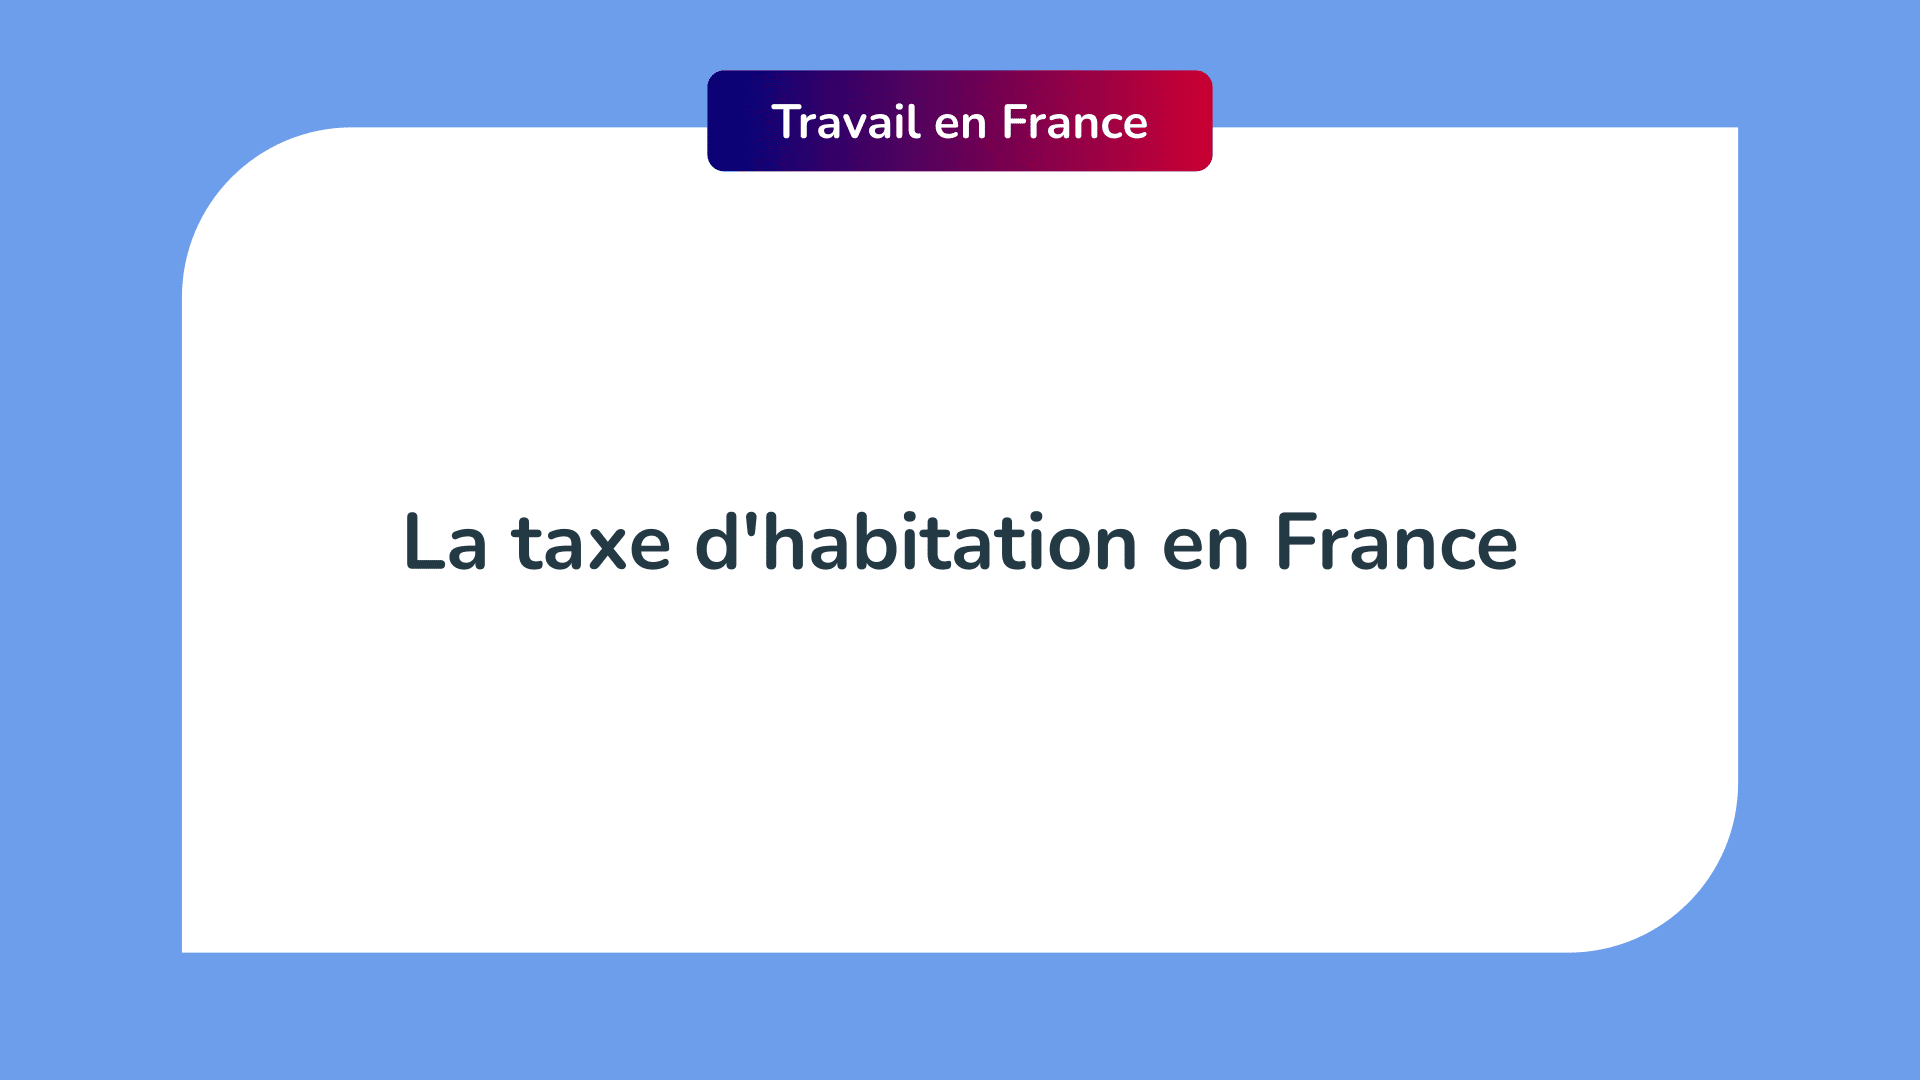 La taxe d'habitation en France